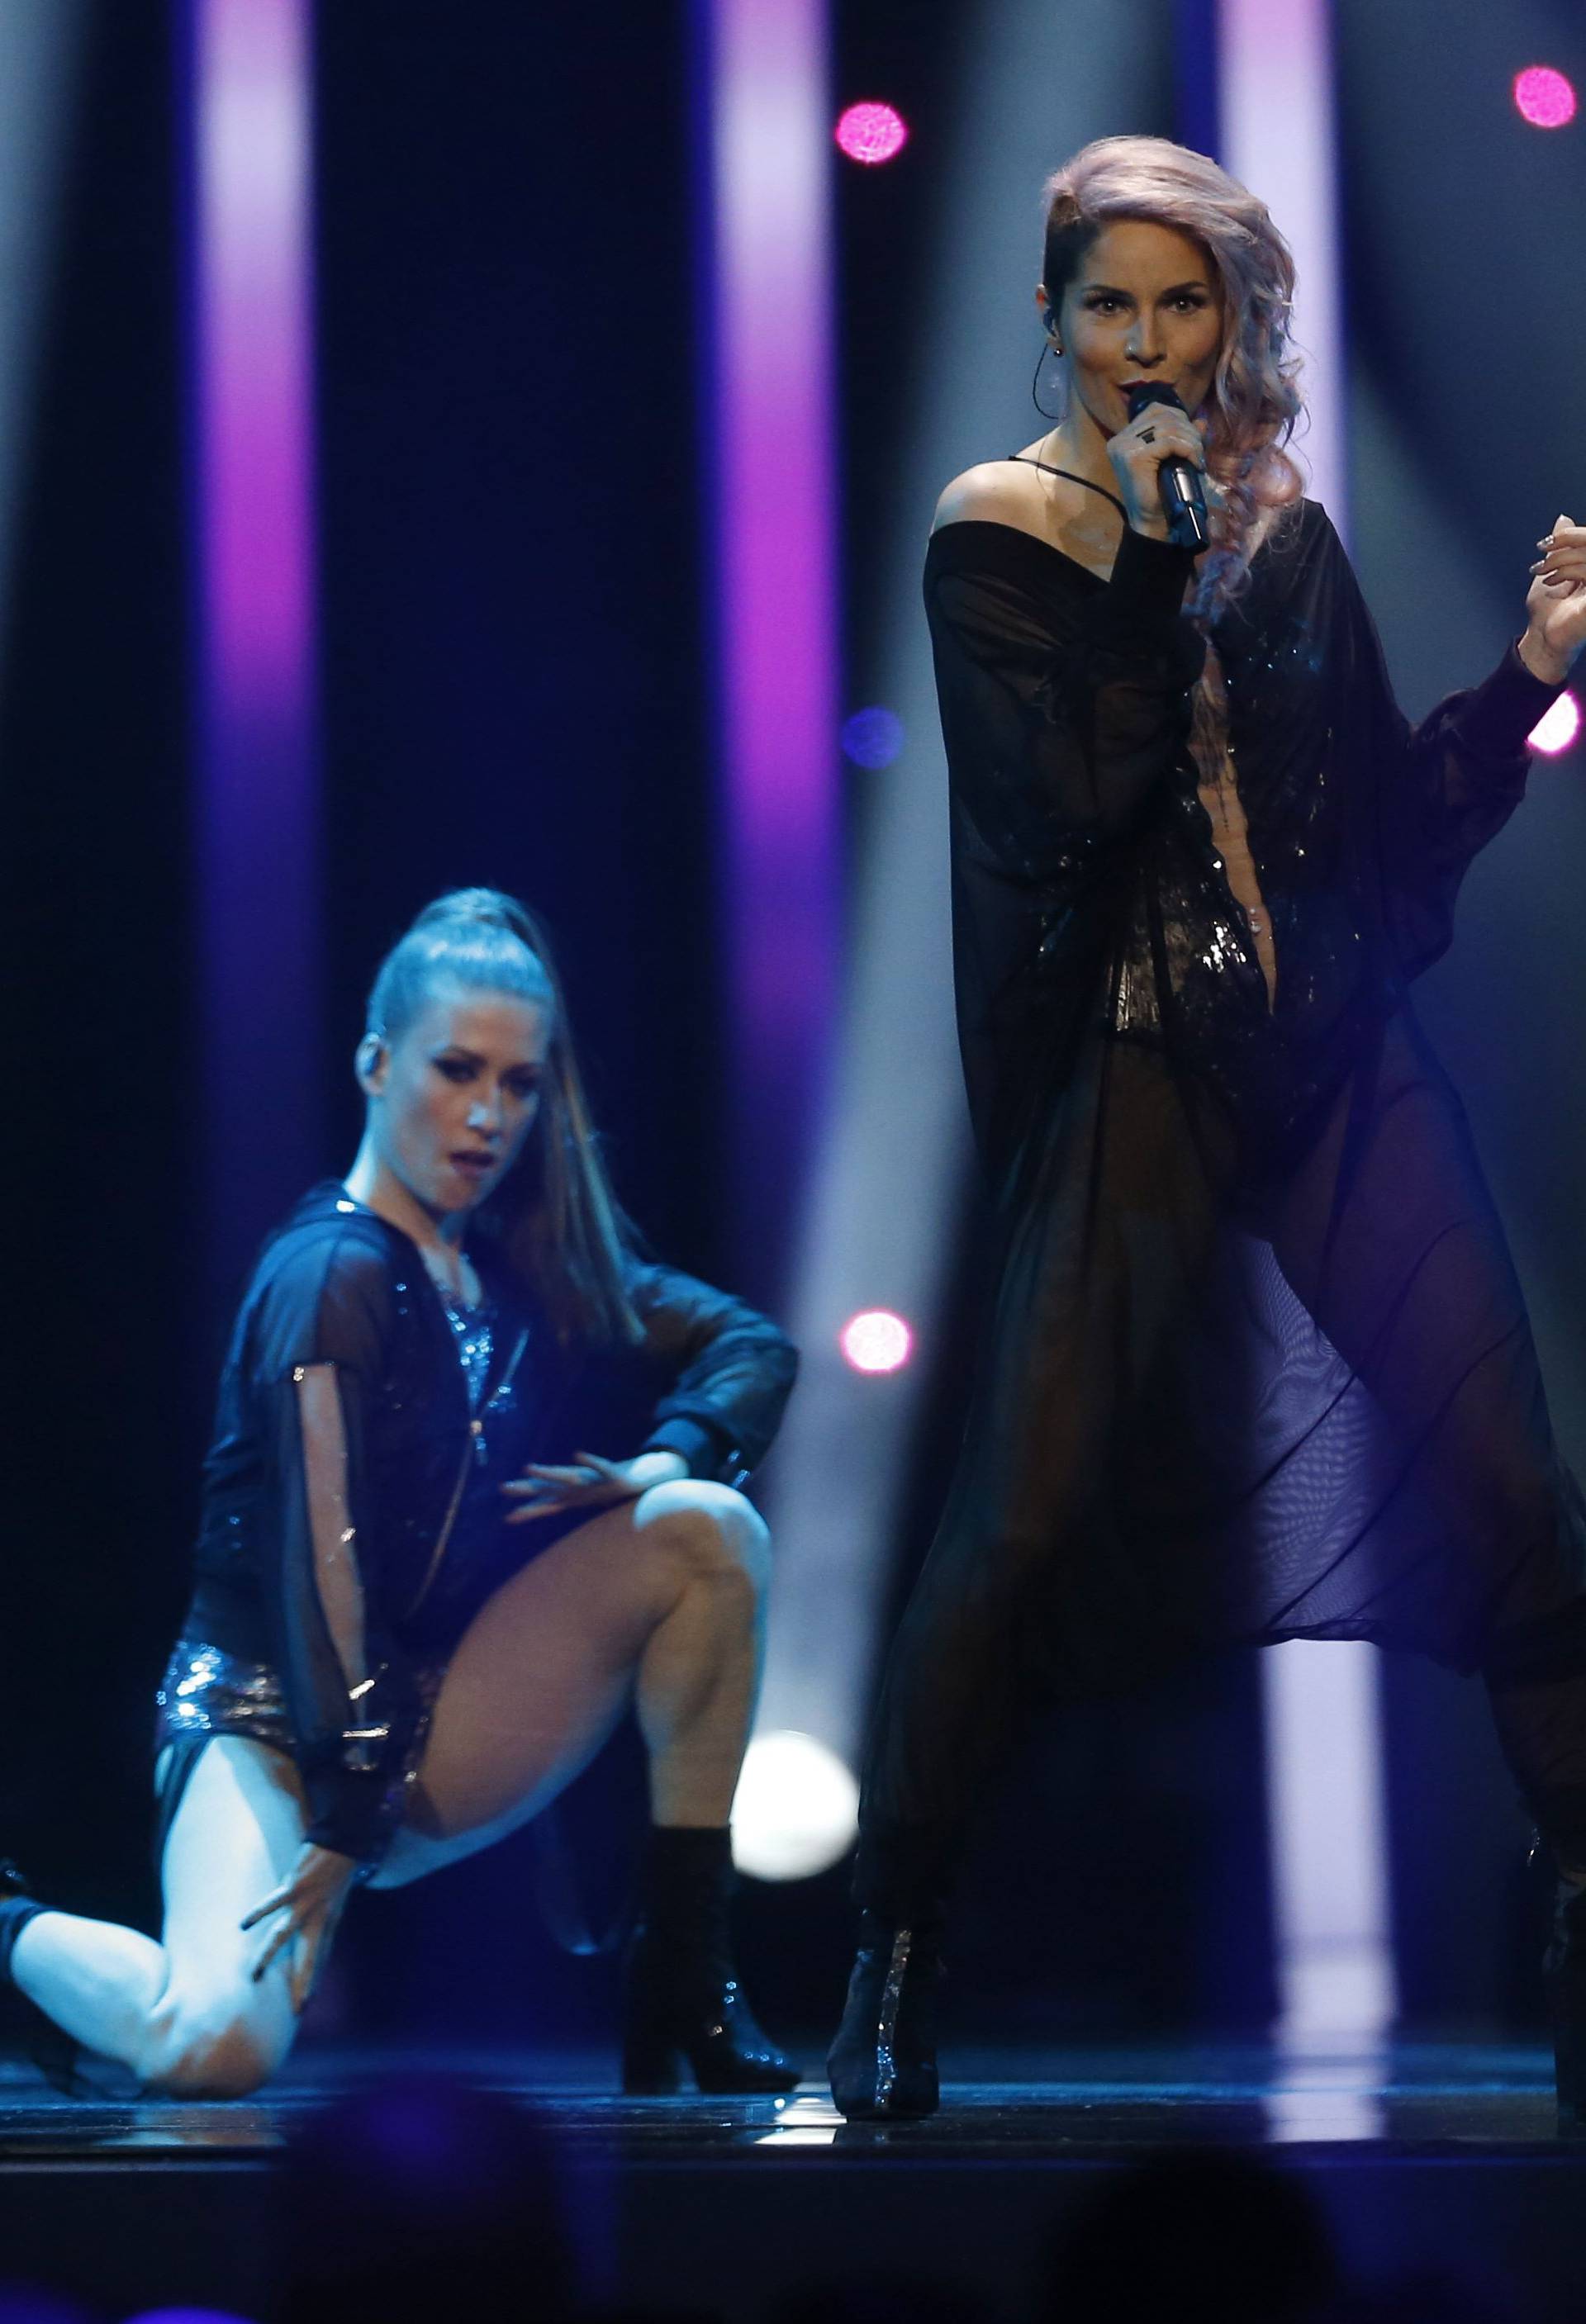 Sloveniaâs Lea Sirk performs âHvala, neâ during the Semi-Final 2 for Eurovision Song Contest 2018 in Lisbon